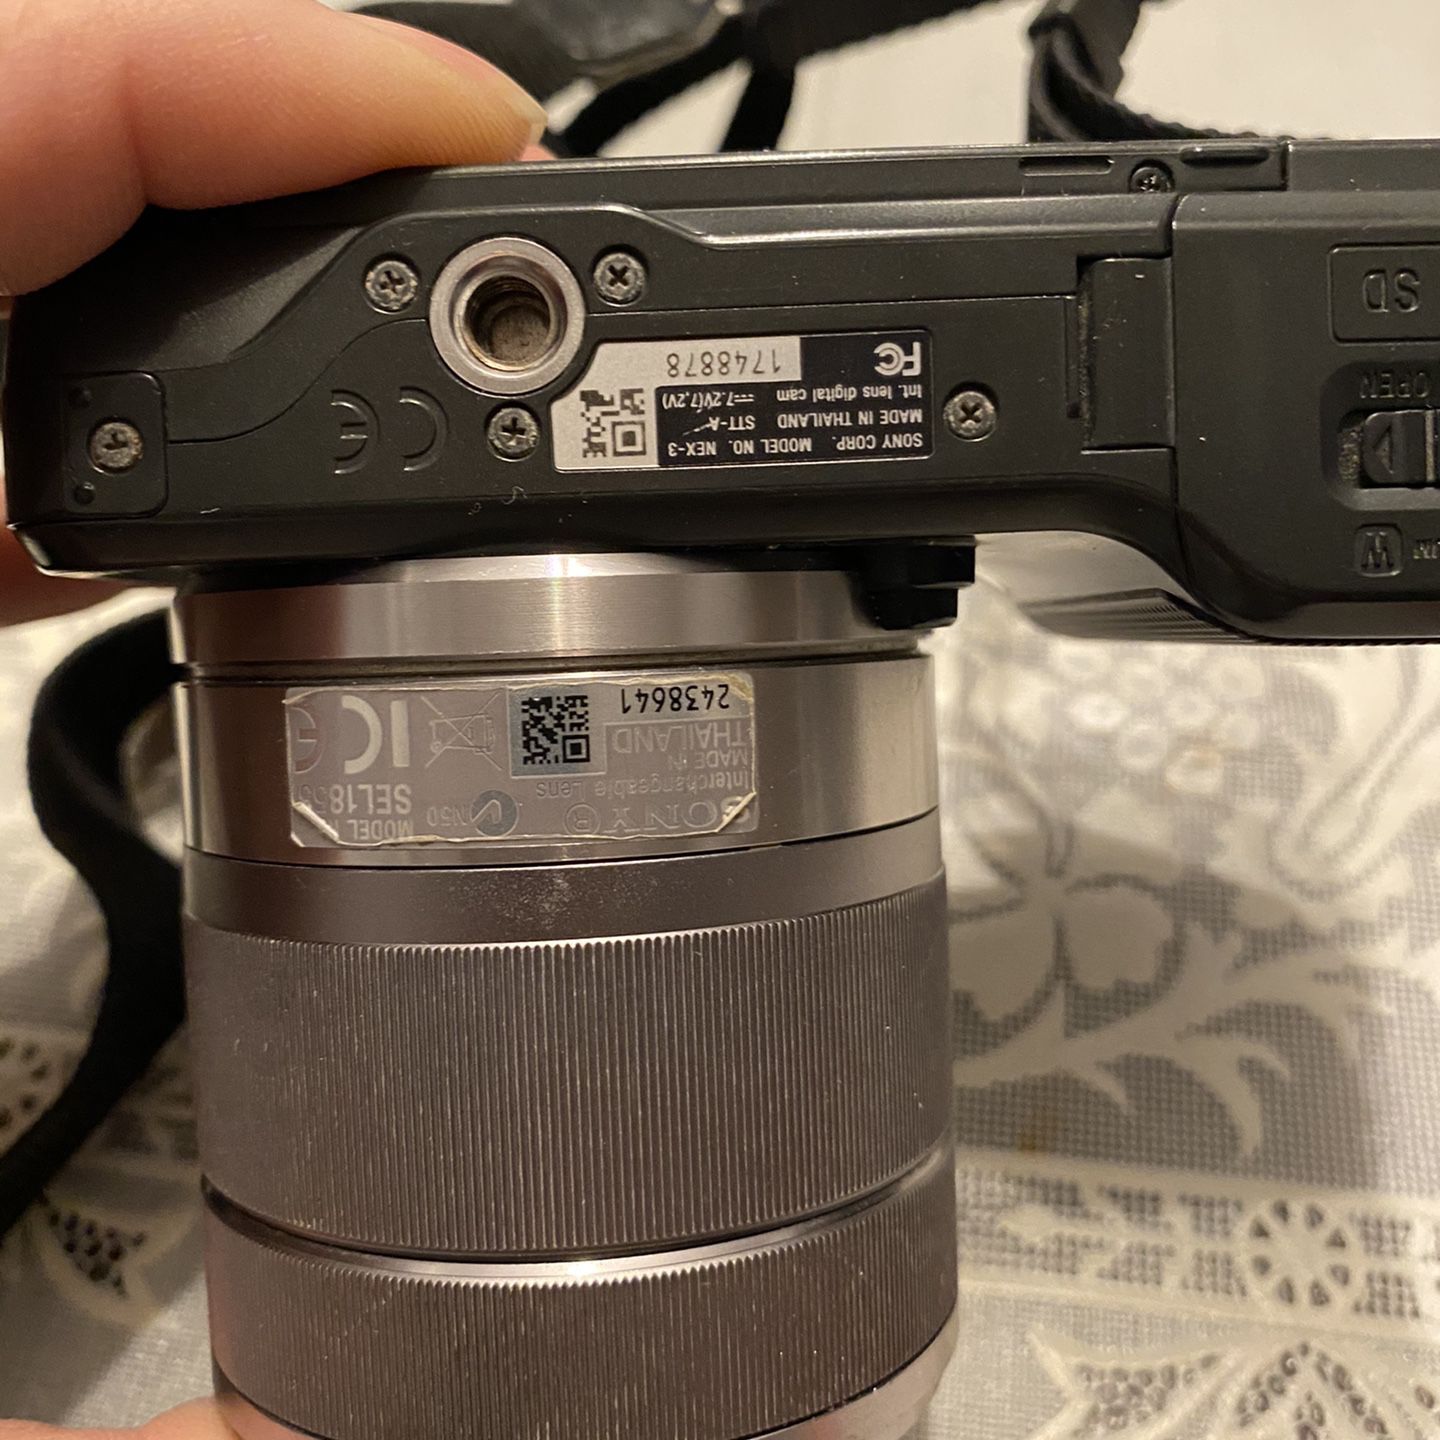 Sony Nex 3 Camera With 18-55/3.5-56 Lens